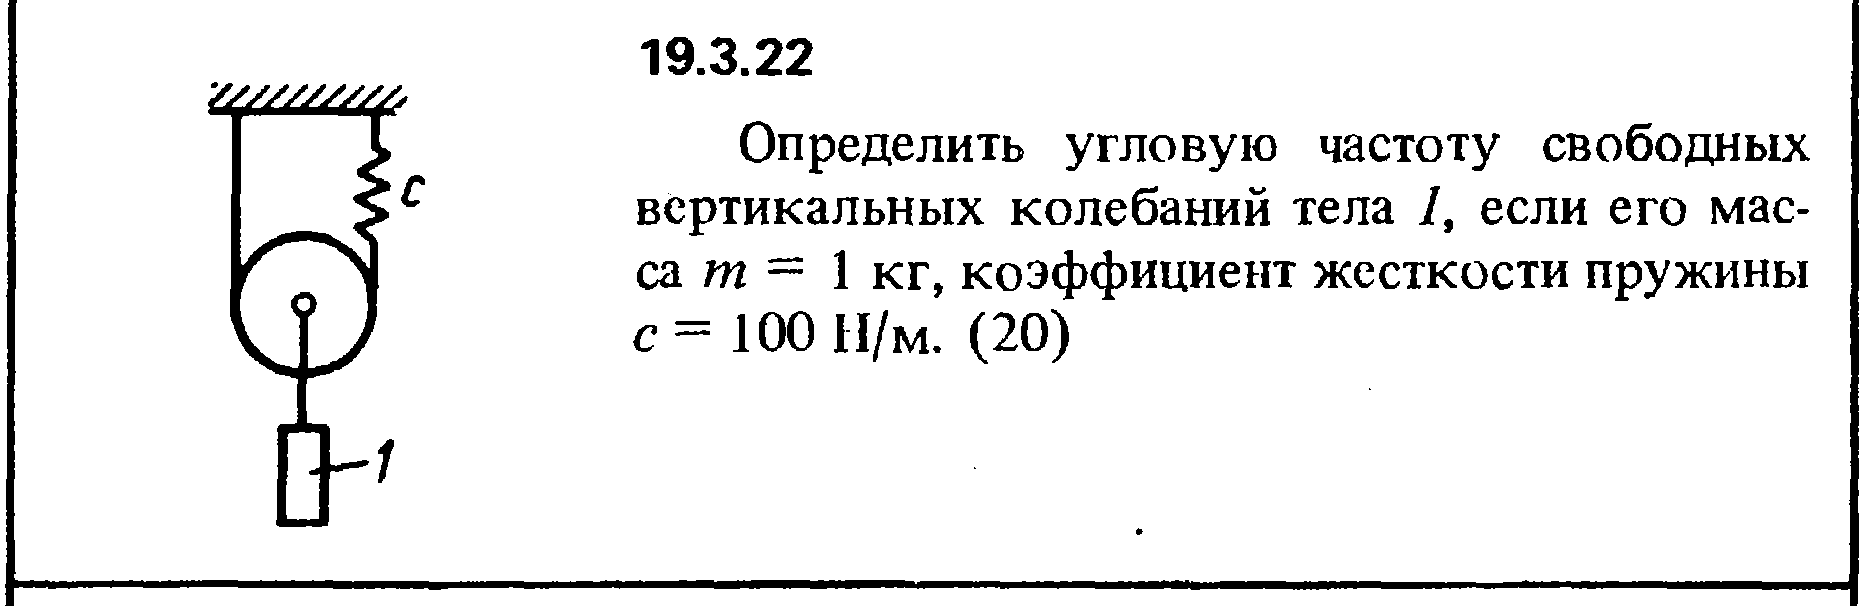 Решение 19.3.22 из сборника (решебника) Кепе О.Е. 1989